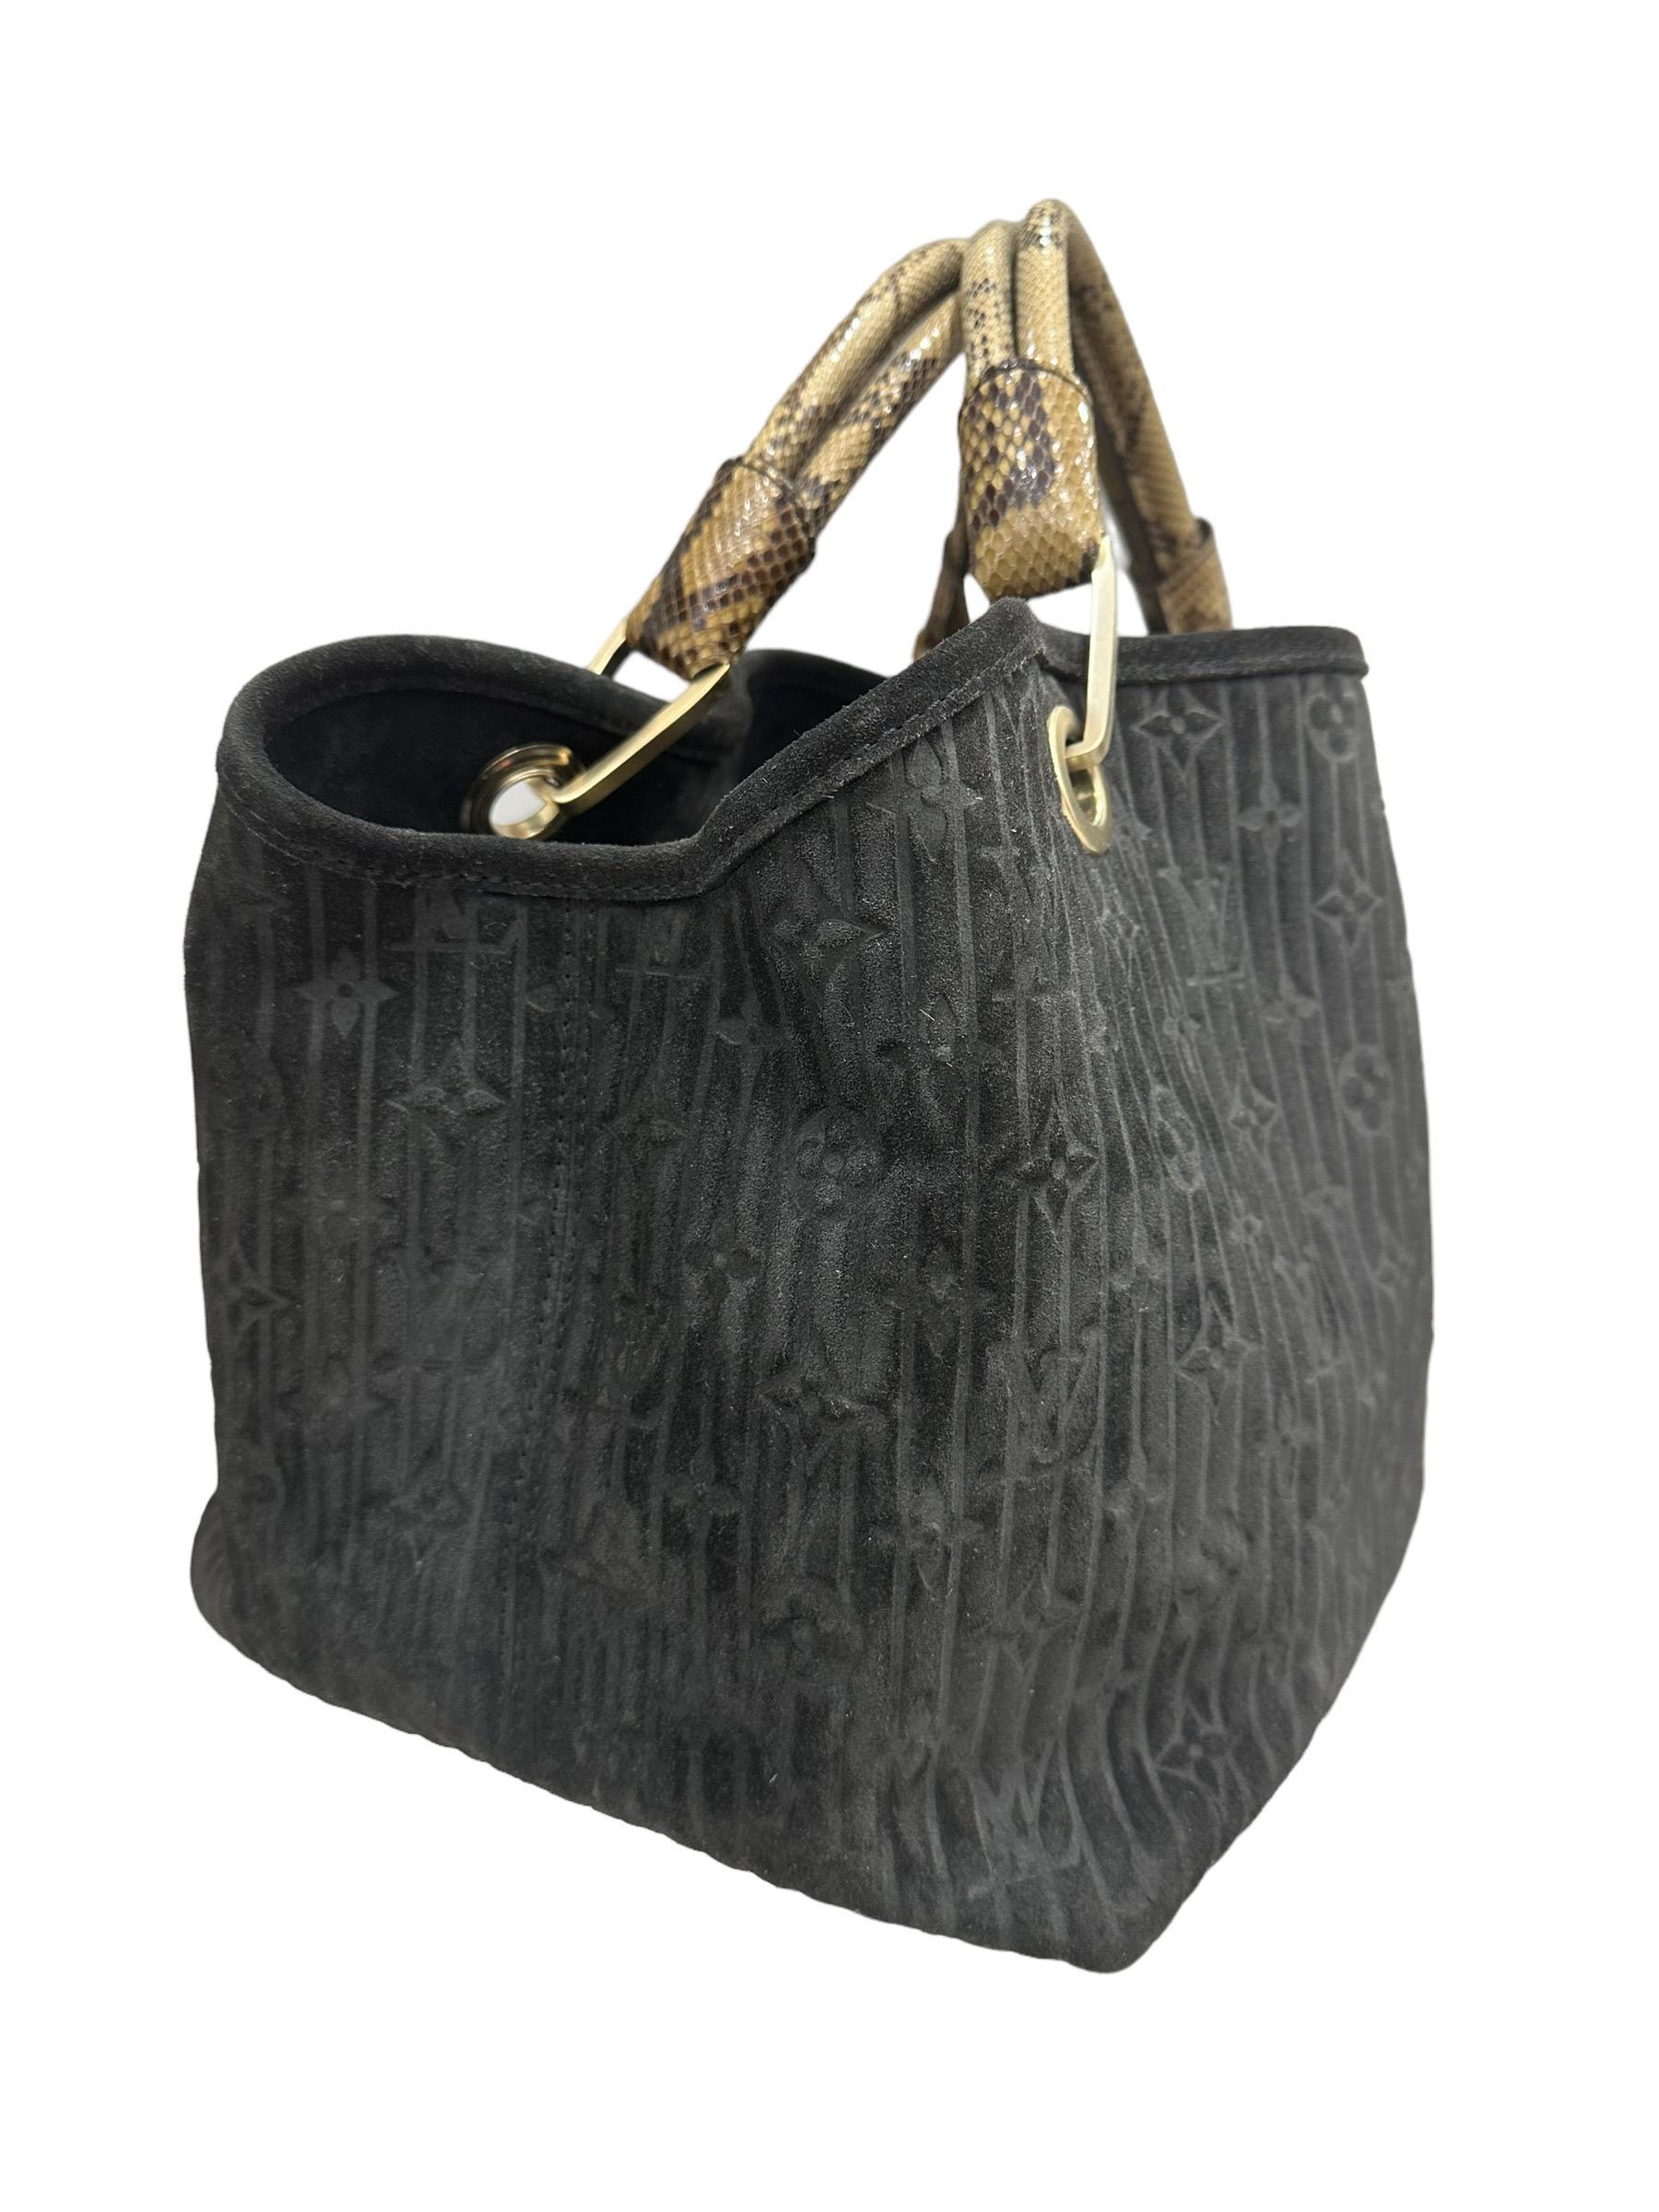 2008 Lousi Vuitton Whisper Black Suede Top Handle Bag Limited Edition For Sale 5